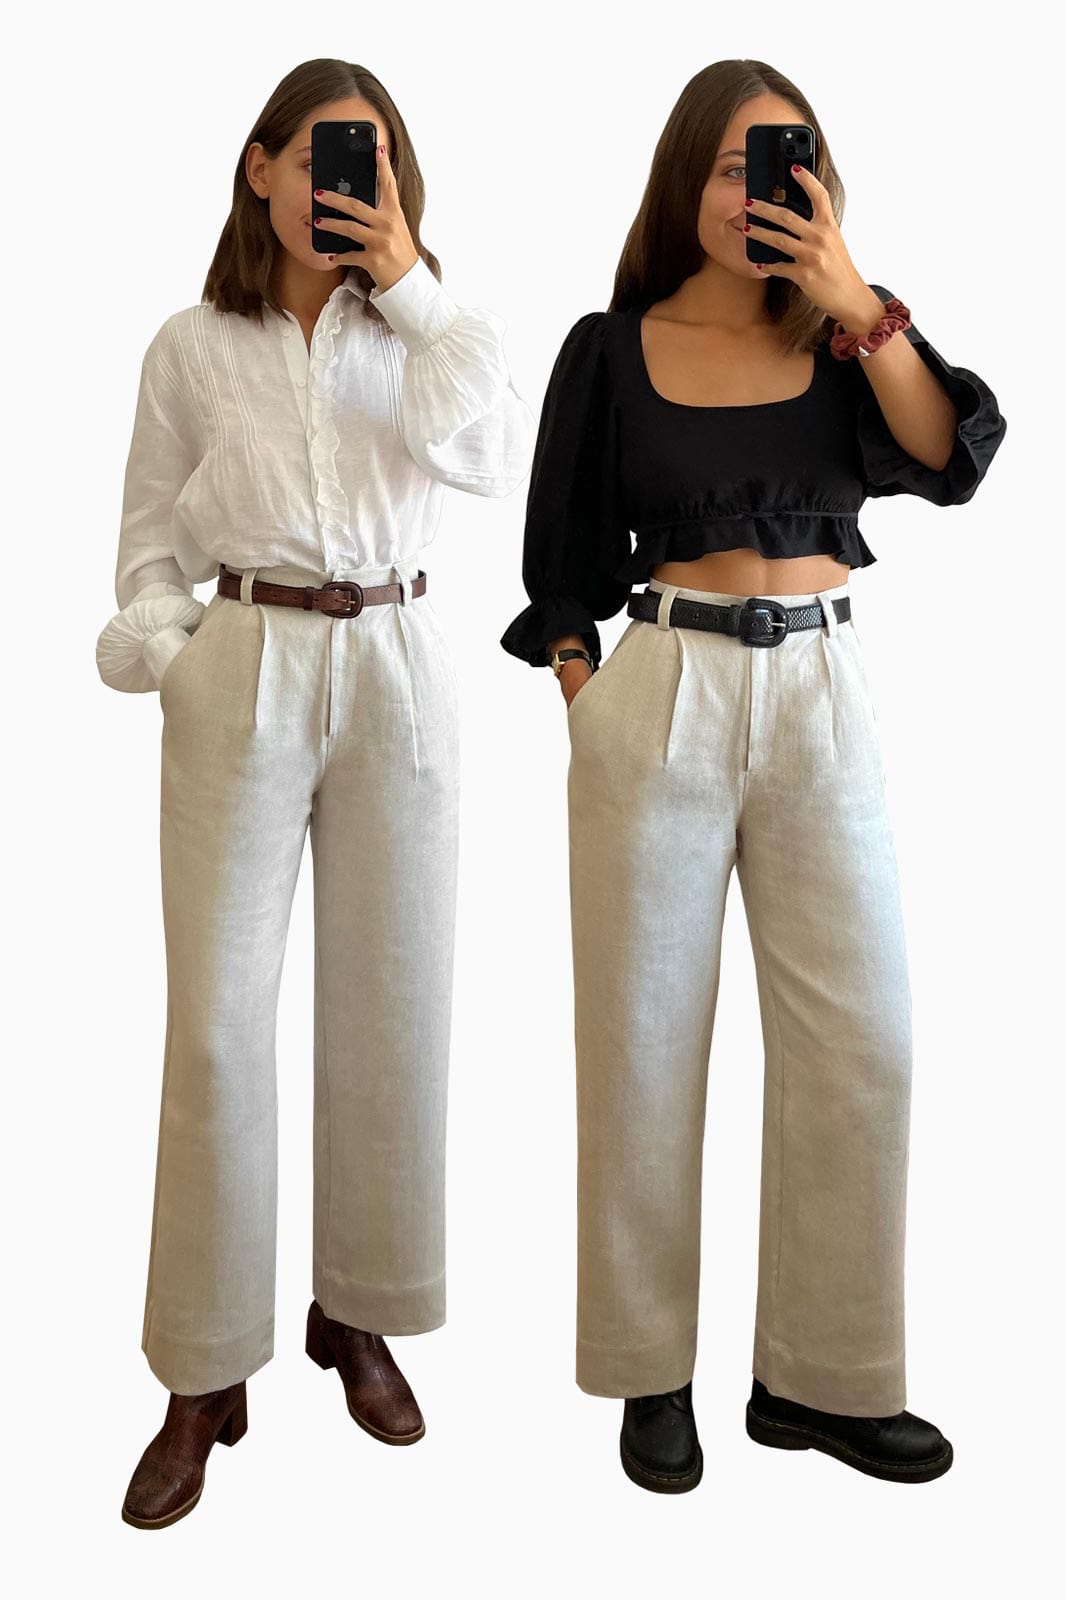 arkitaip Trousers The Wabi Pleated Trousers in beige herringbone - Archive